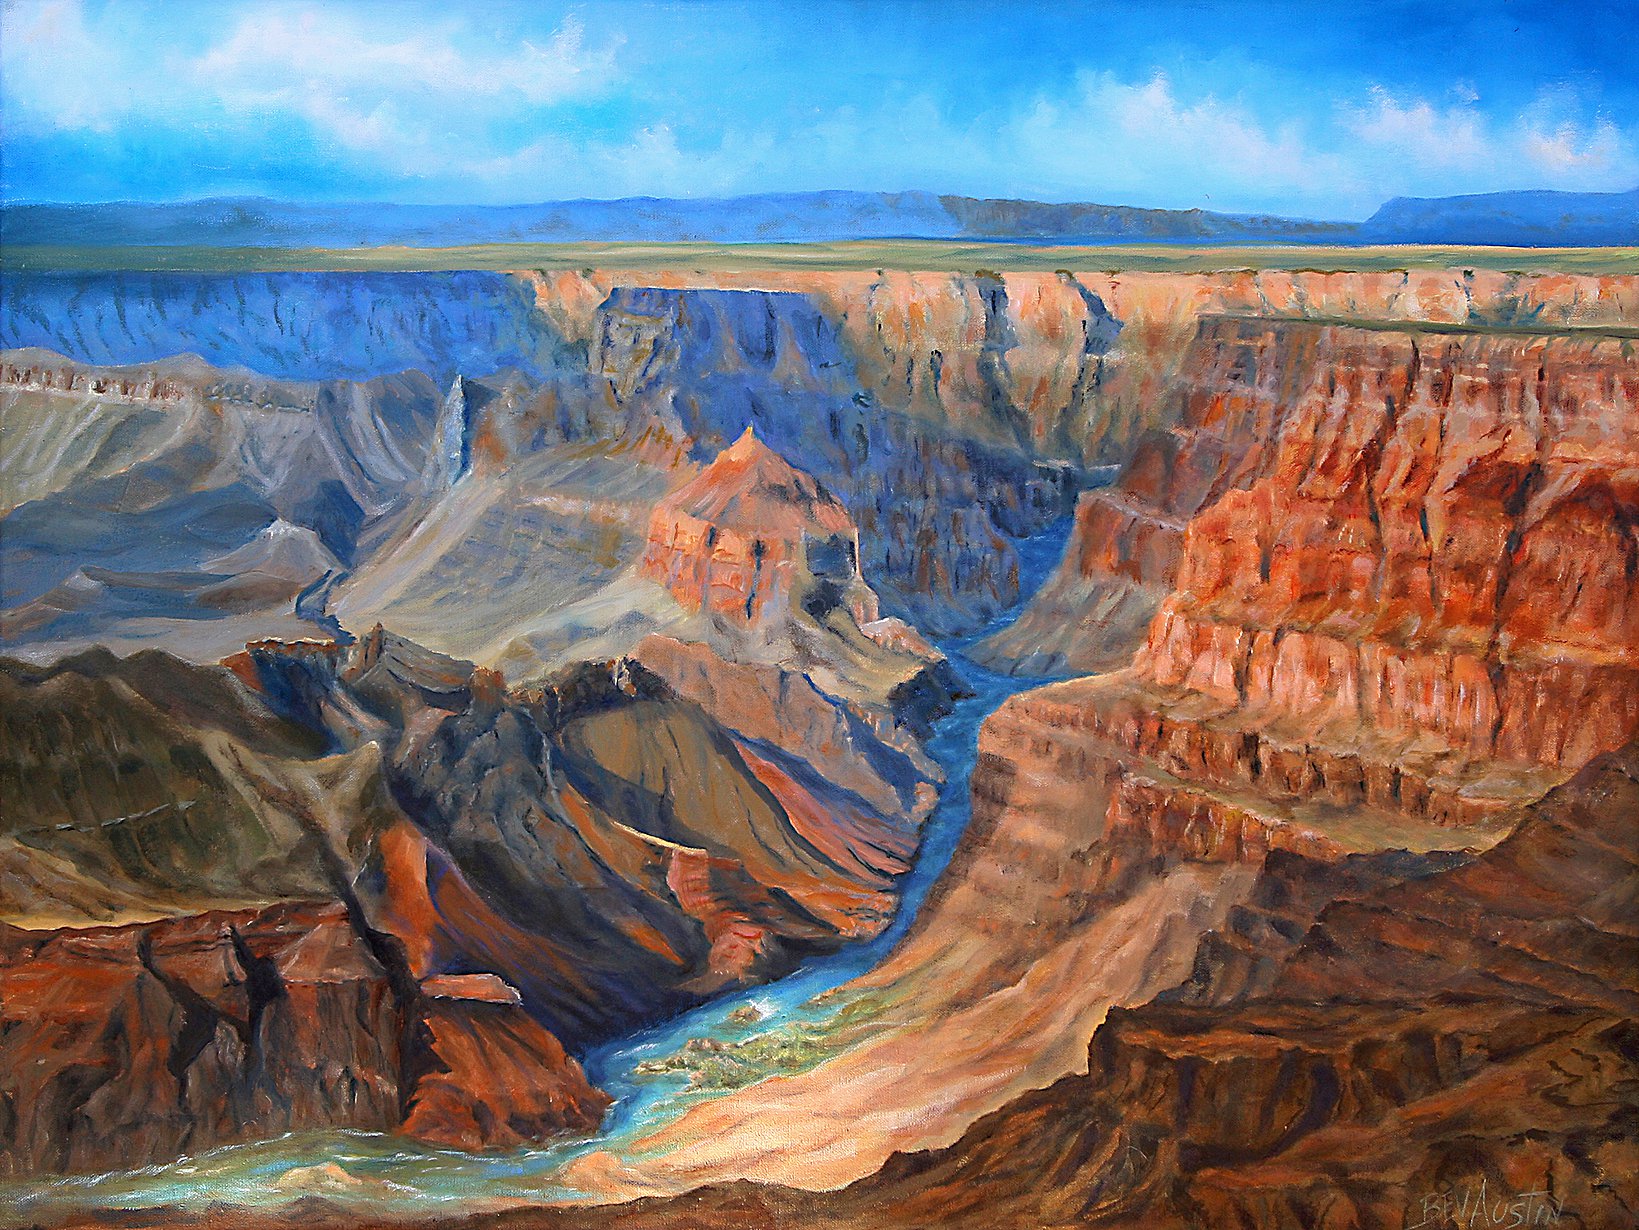 Artist appreciates Grand Canyon National Park